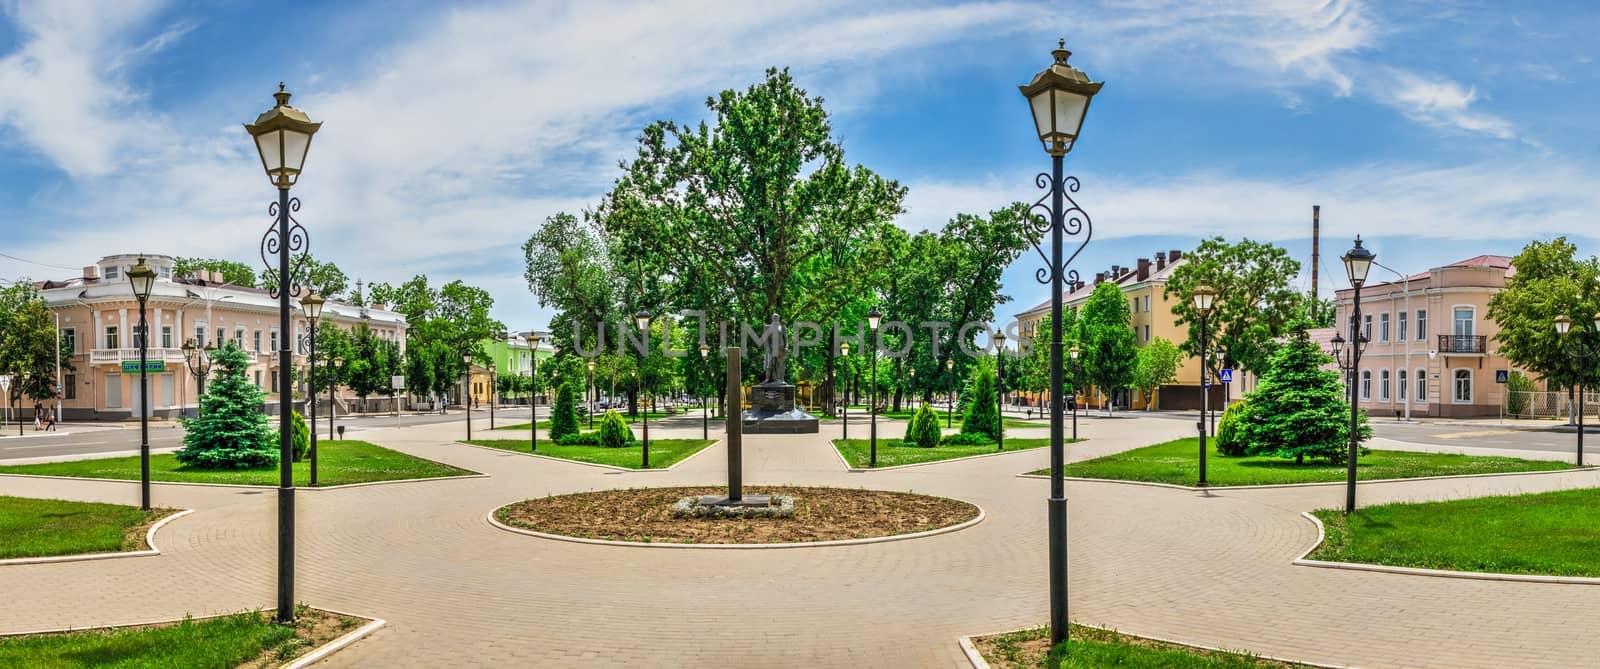 Suvorov Avenue in Izmail, Ukraine by Multipedia